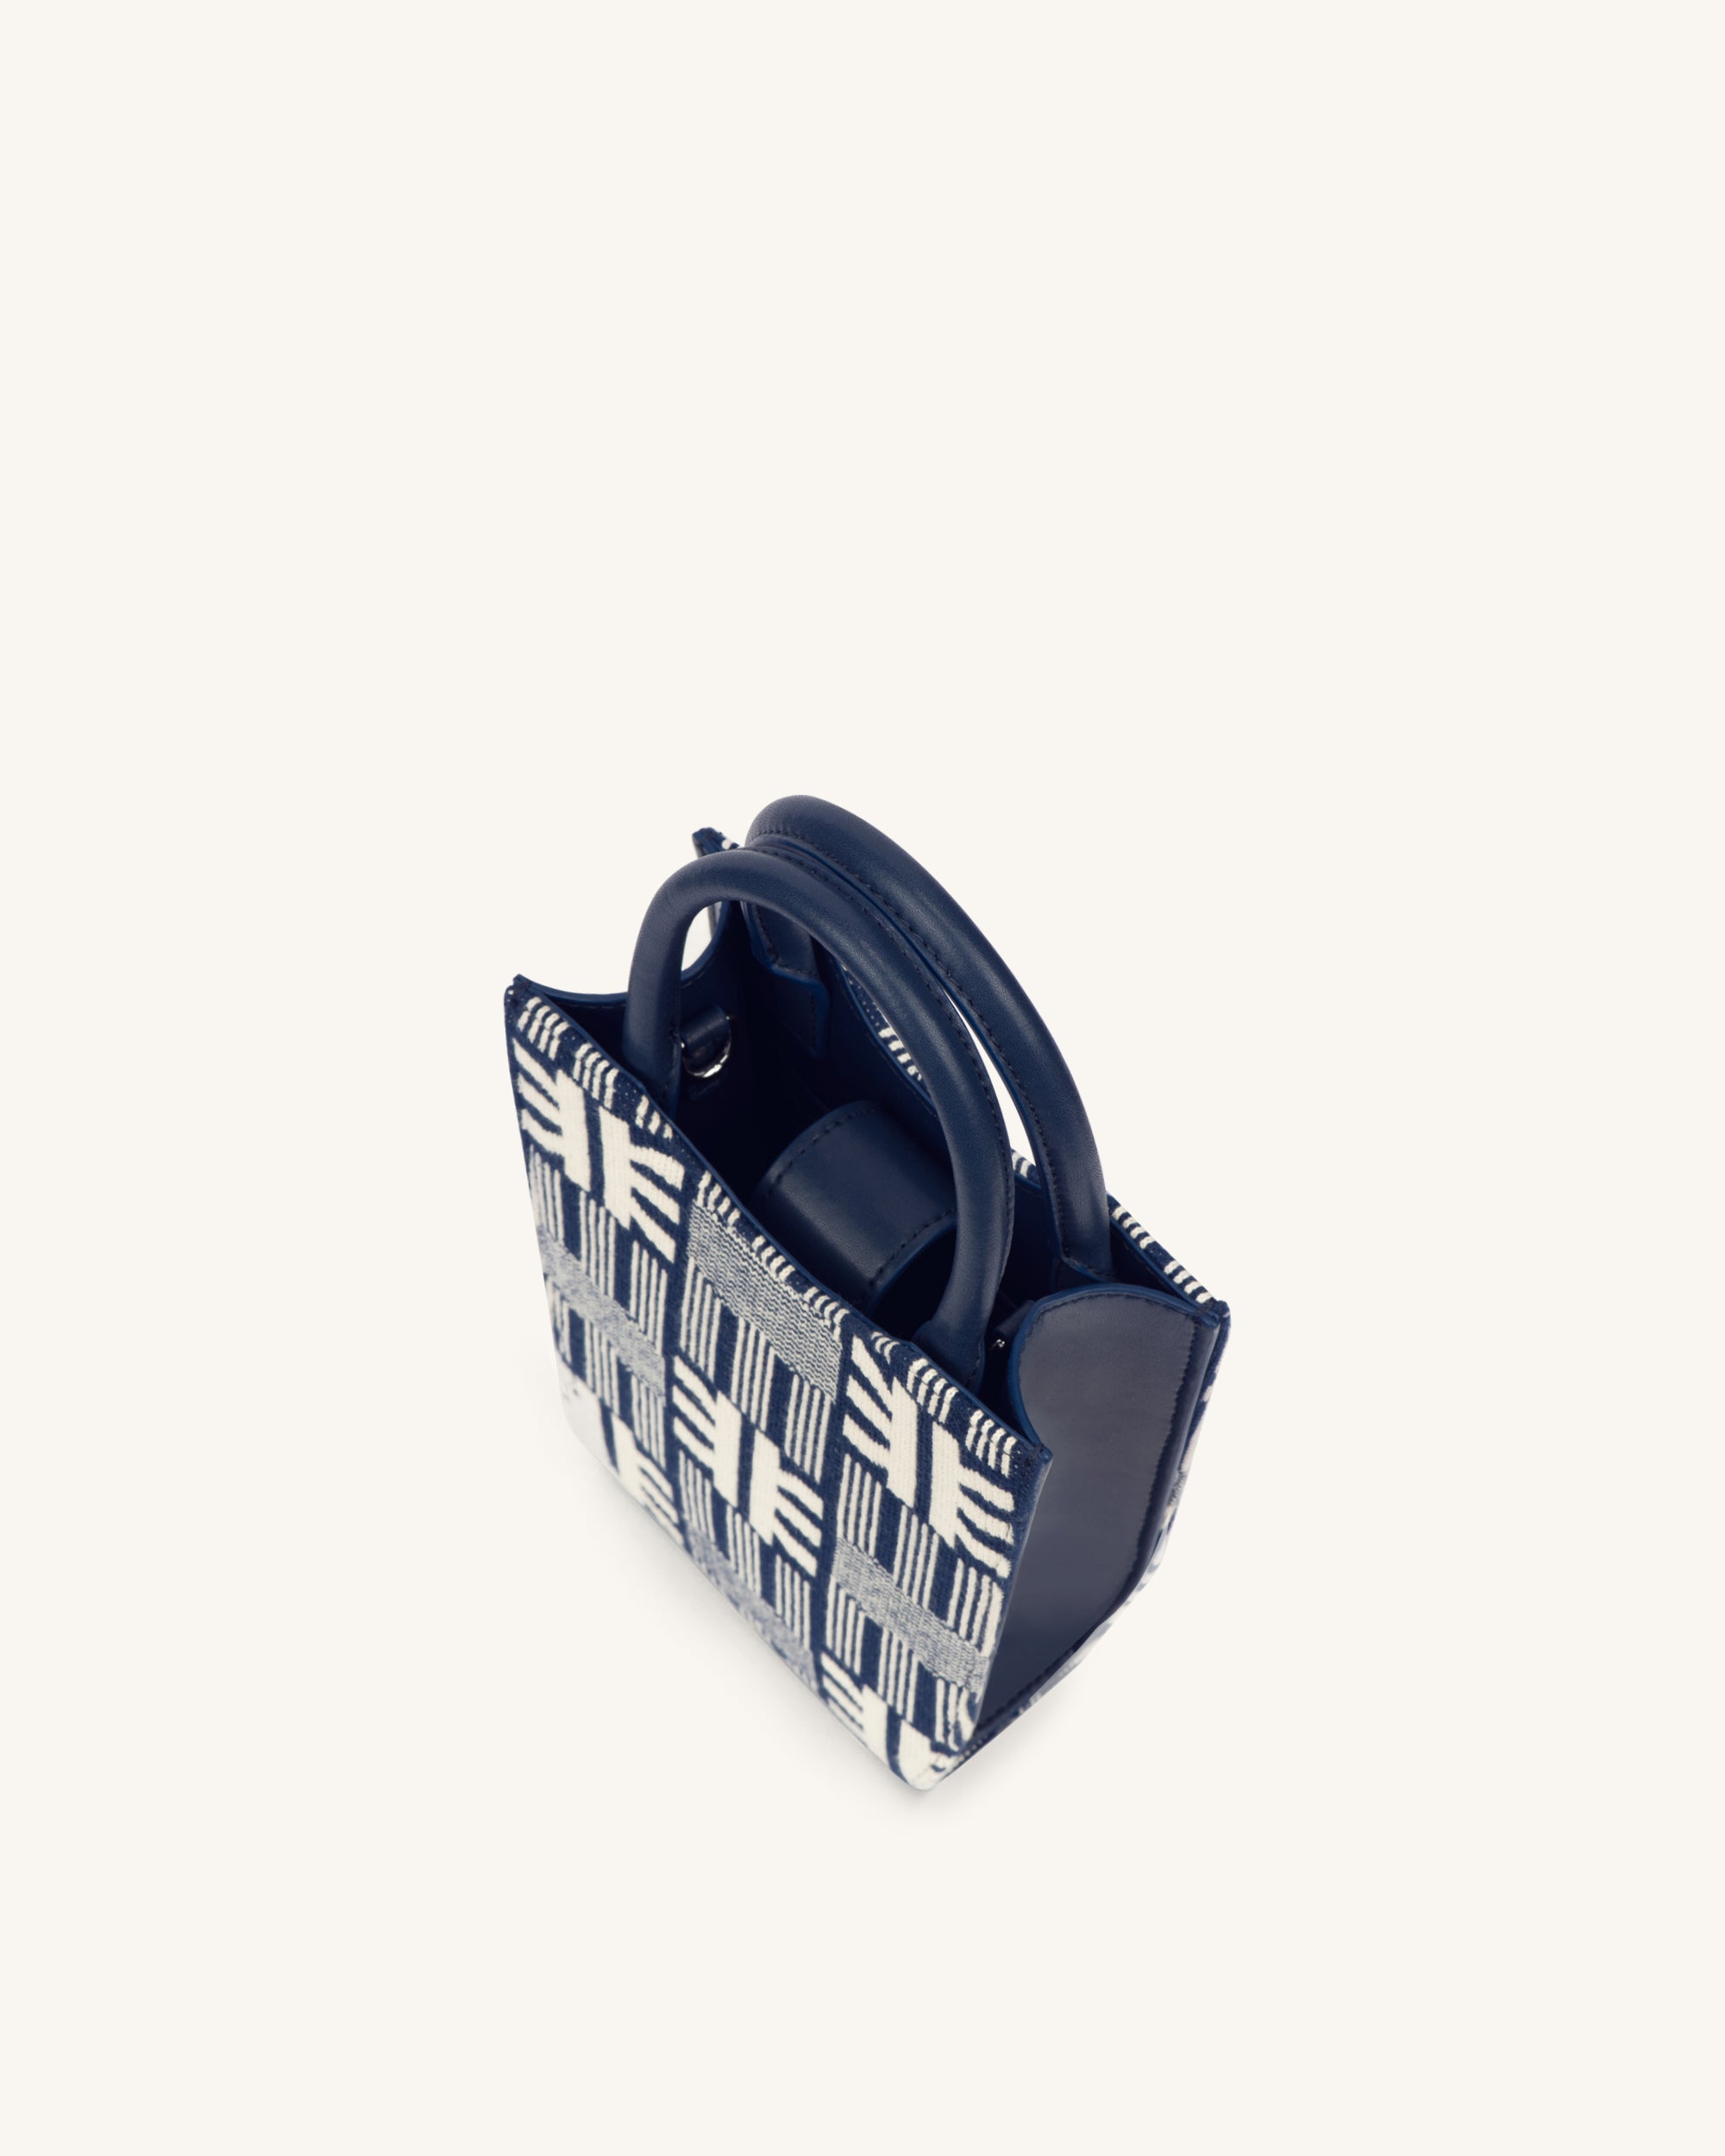 FEI Straps Phone Bag - Black Online Shopping - JW Pei